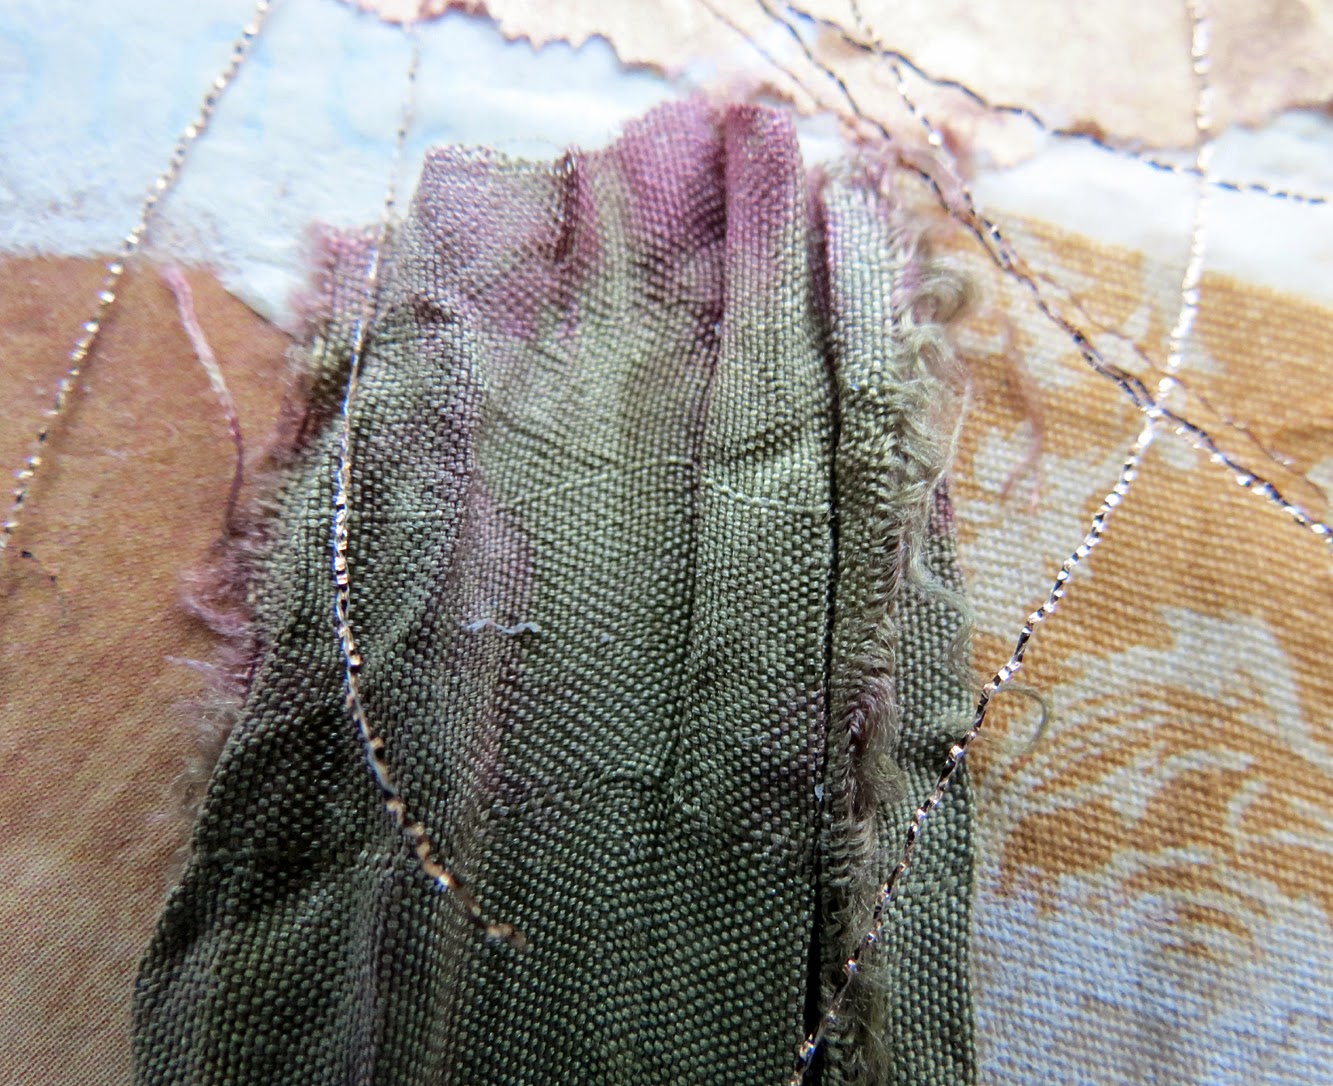 CAROLYN SAXBY MIXED MEDIA TEXTILE ART: textiles - free fabric collage ...